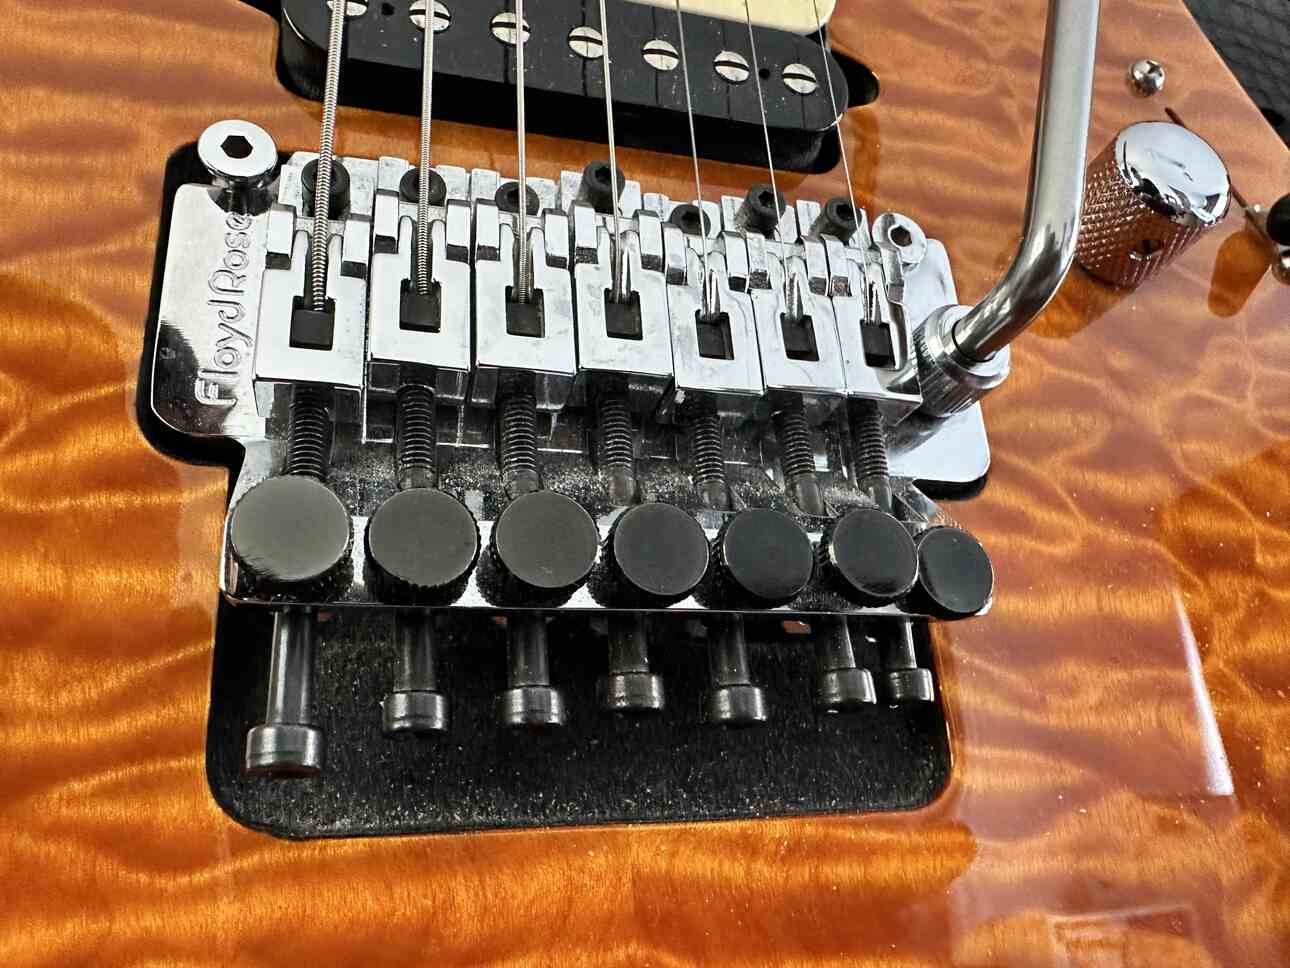 A Floyd Rose bridge on a Suhr Modern 7 string electric guitar.